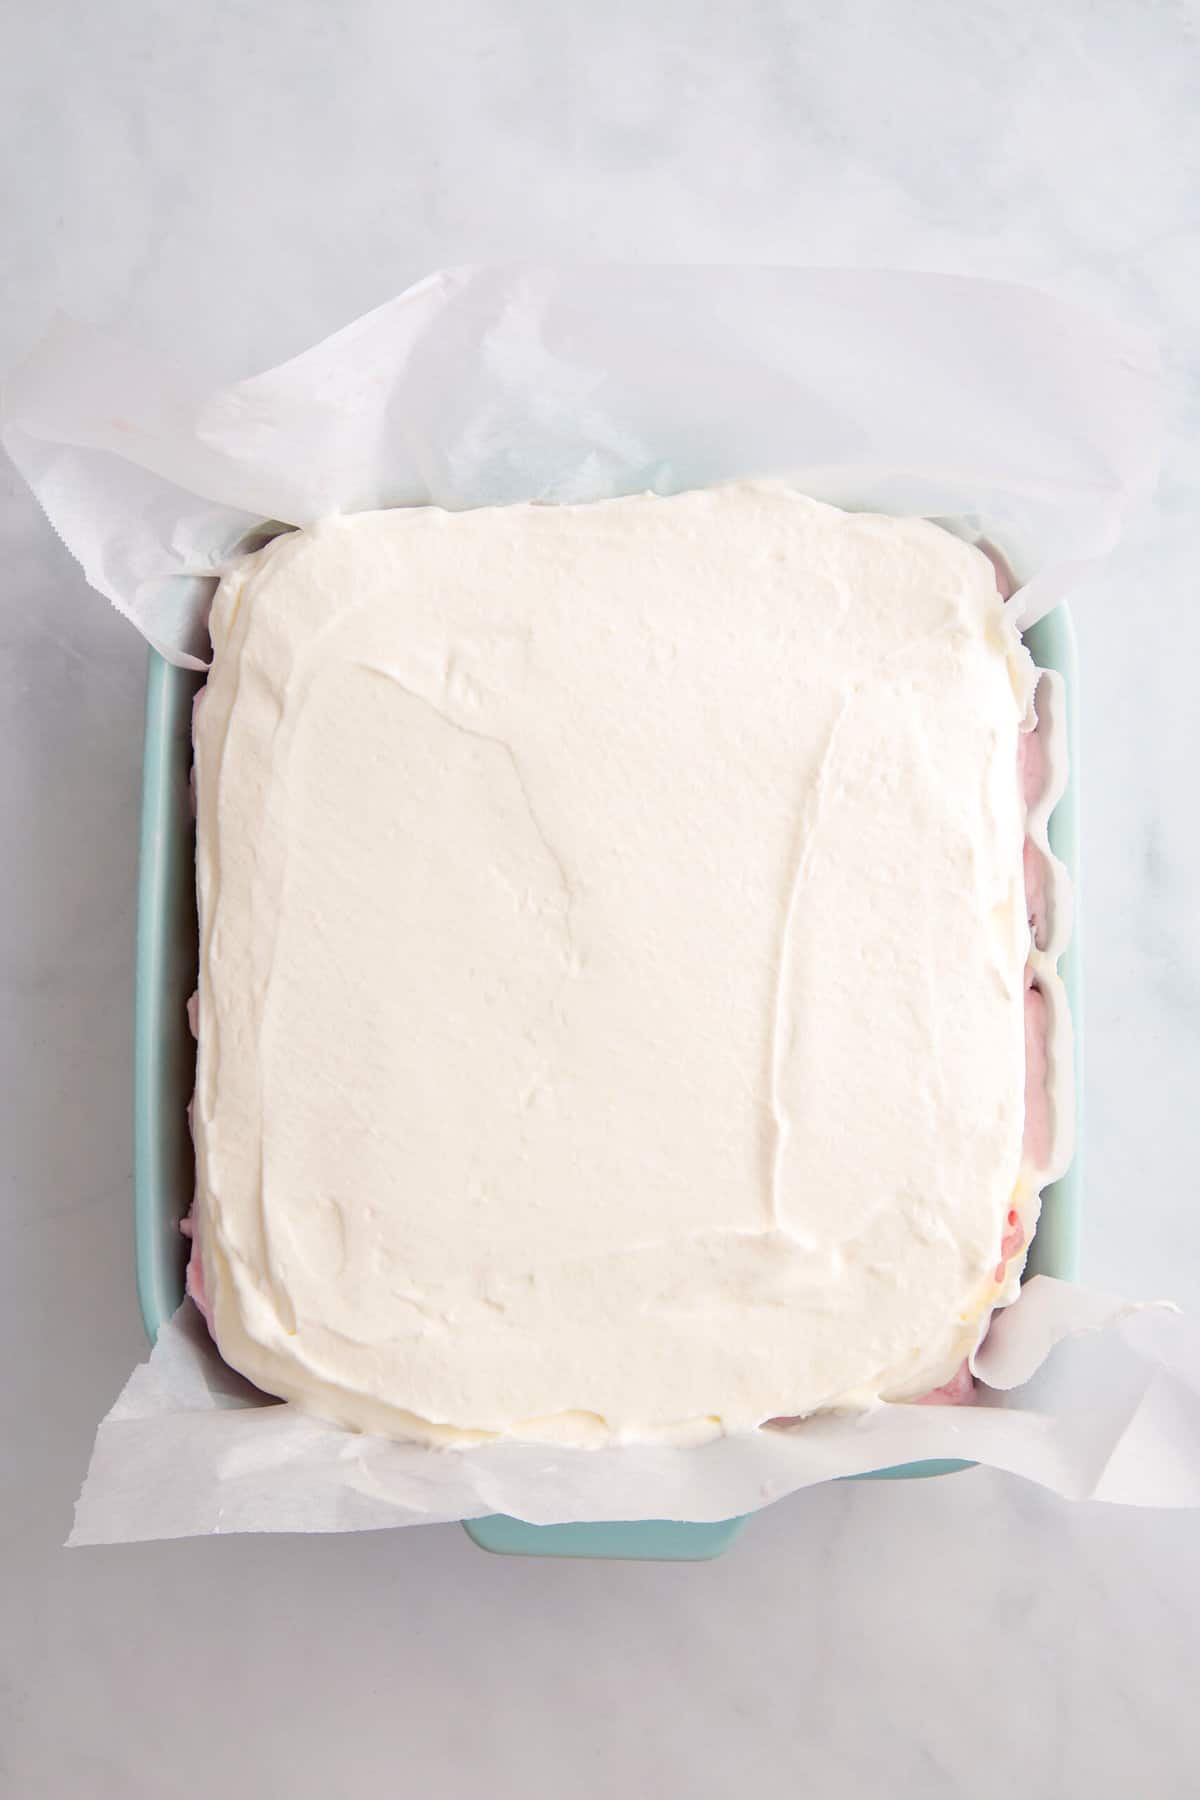 vanilla ice cream layered on top of an 8x8 dish to make strawberry crunch ice cream cake